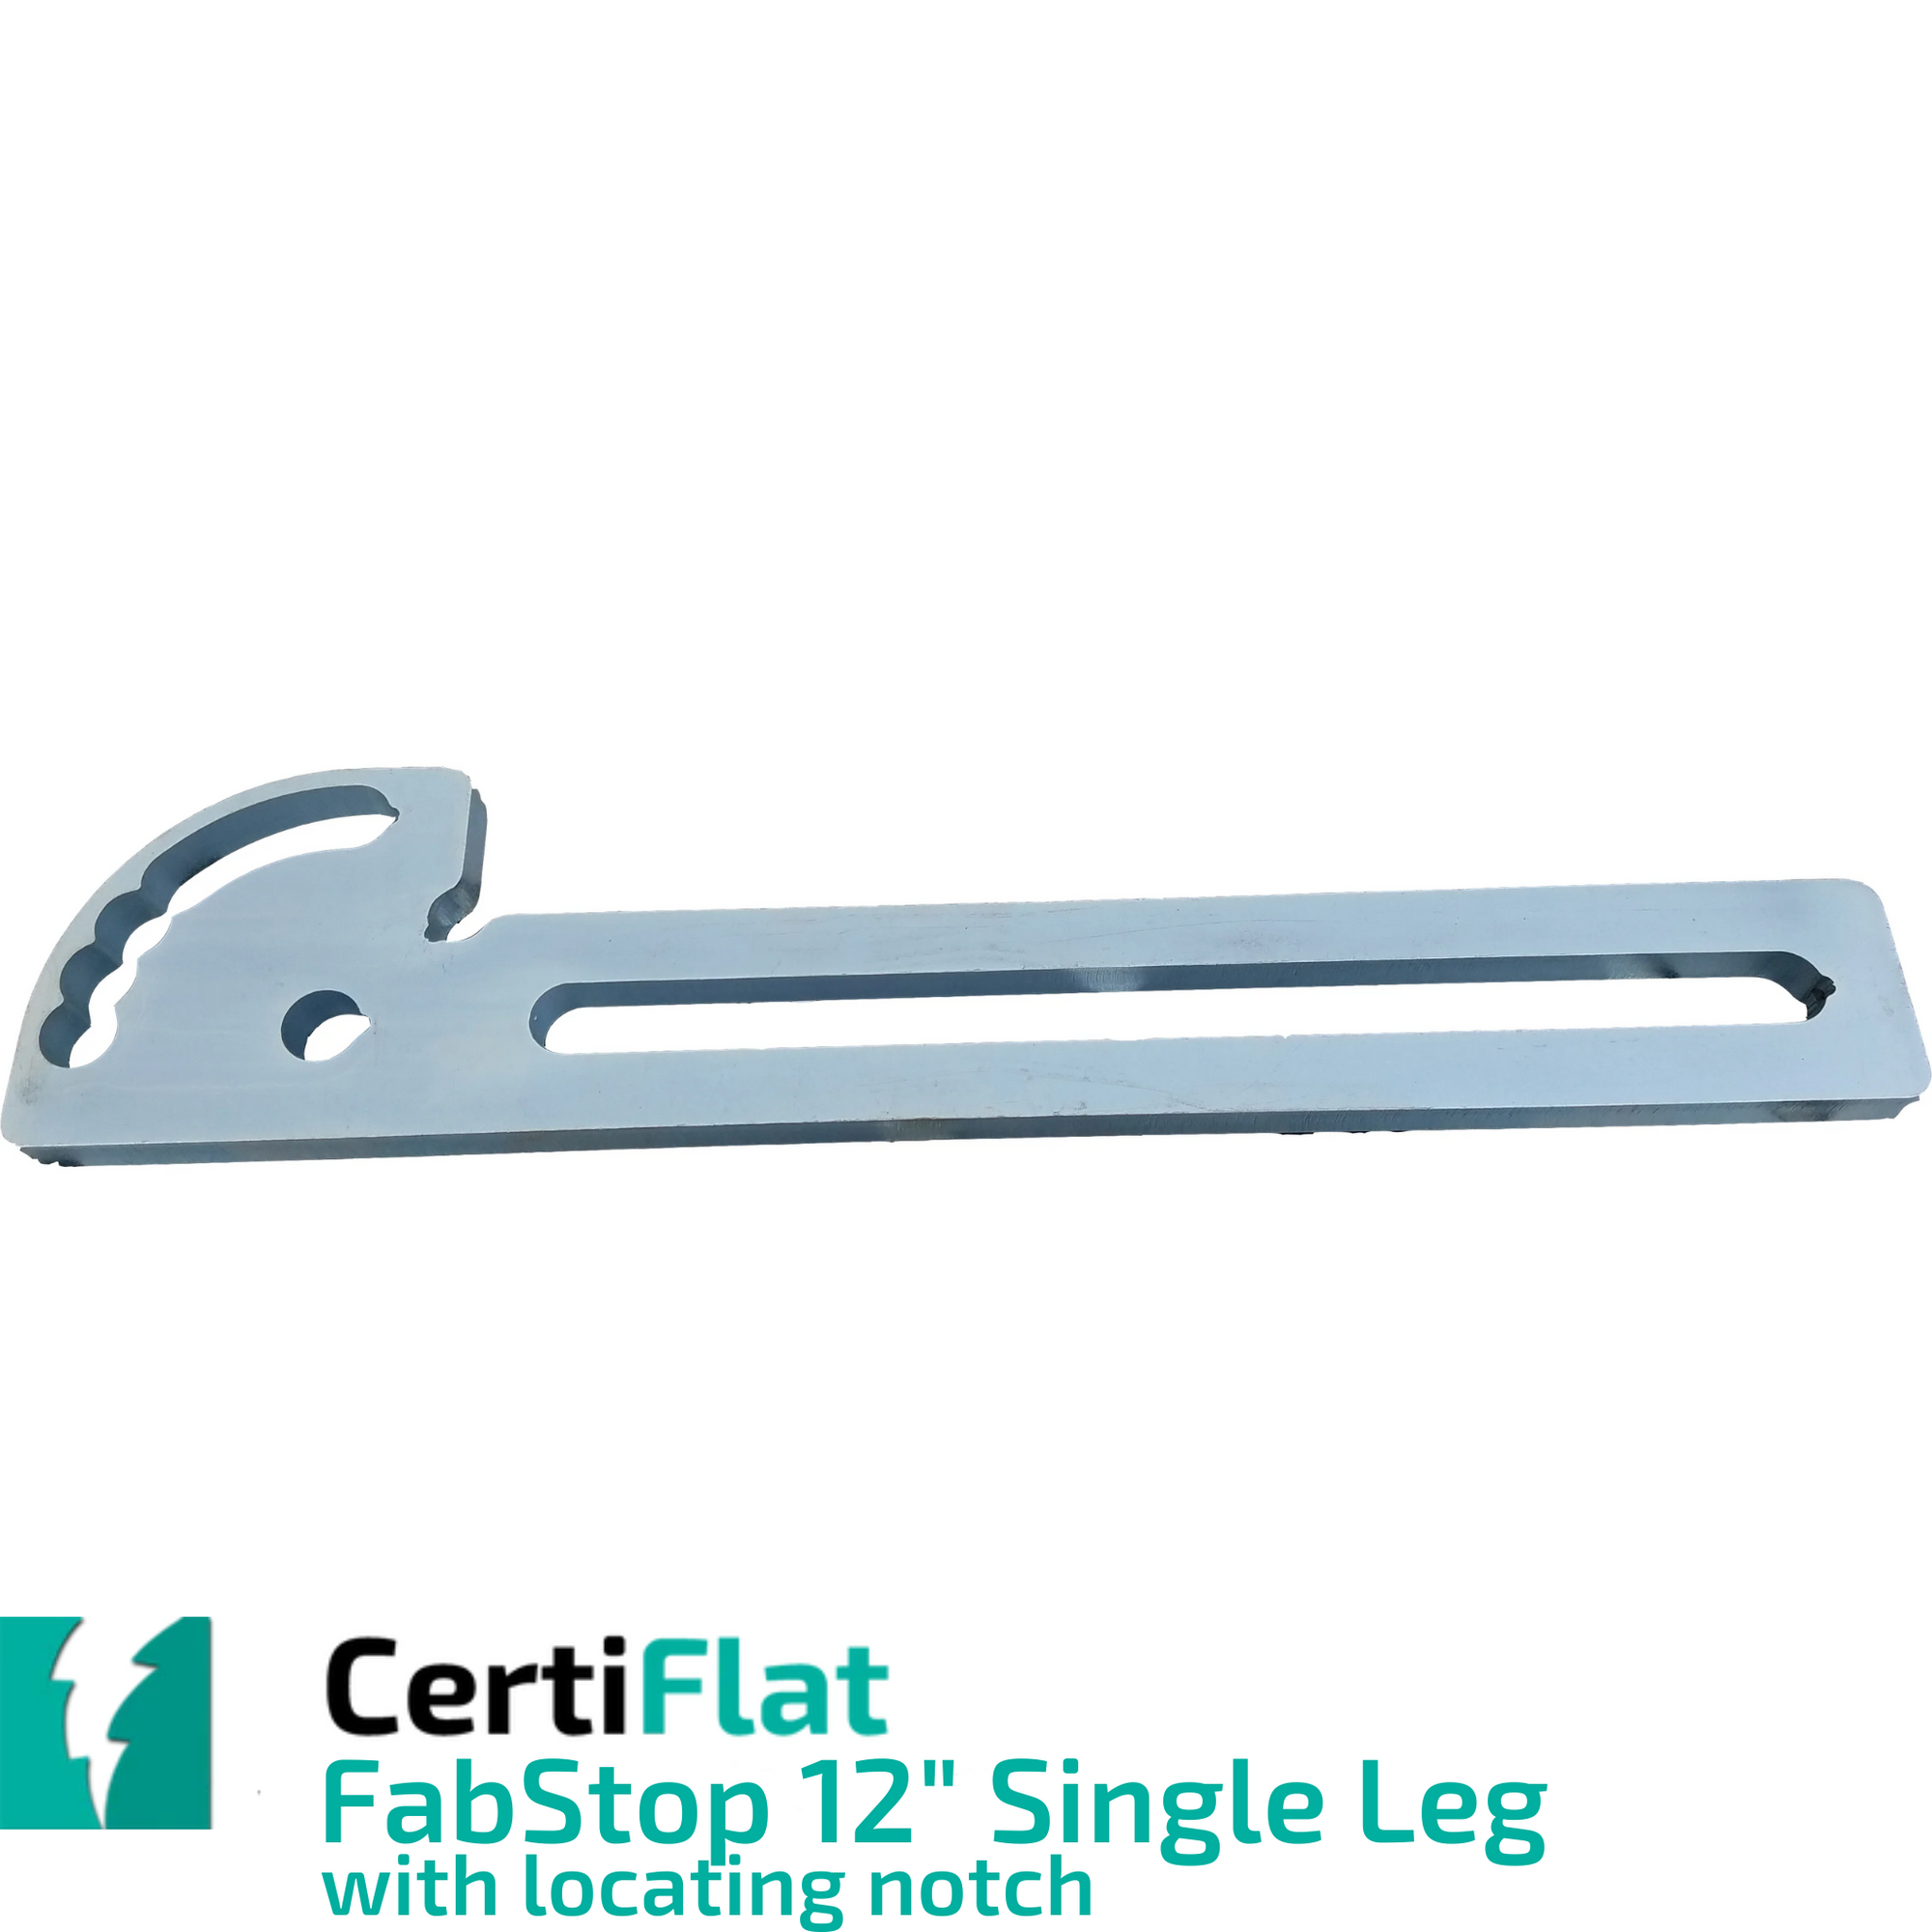 CertiFlat 12" Single Leg FabStop with Locating Notch